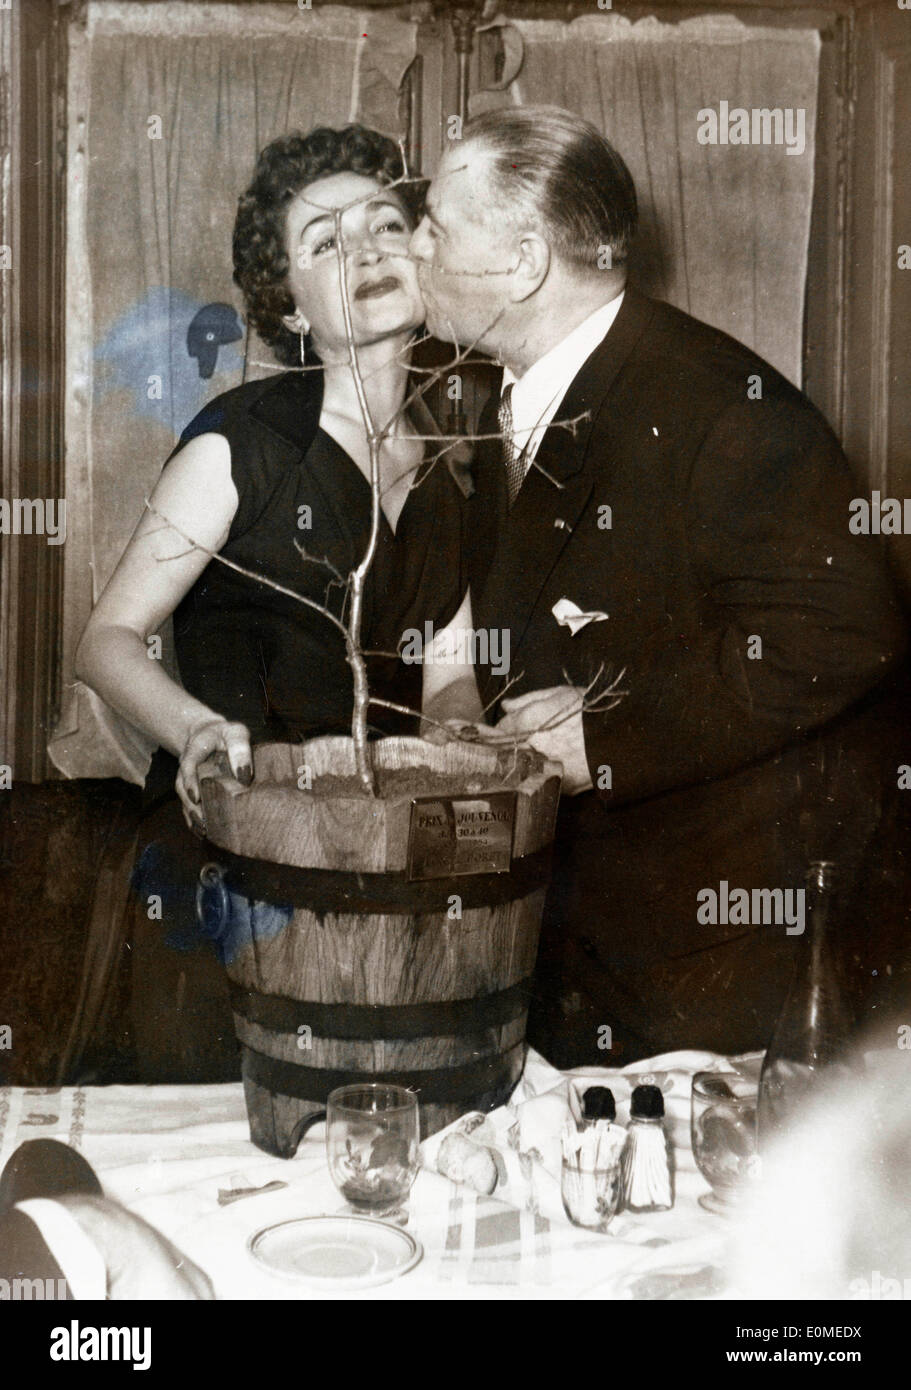 Stunt Pilot Marcel Doret kisses singer Rose Avril at a party Stock Photo